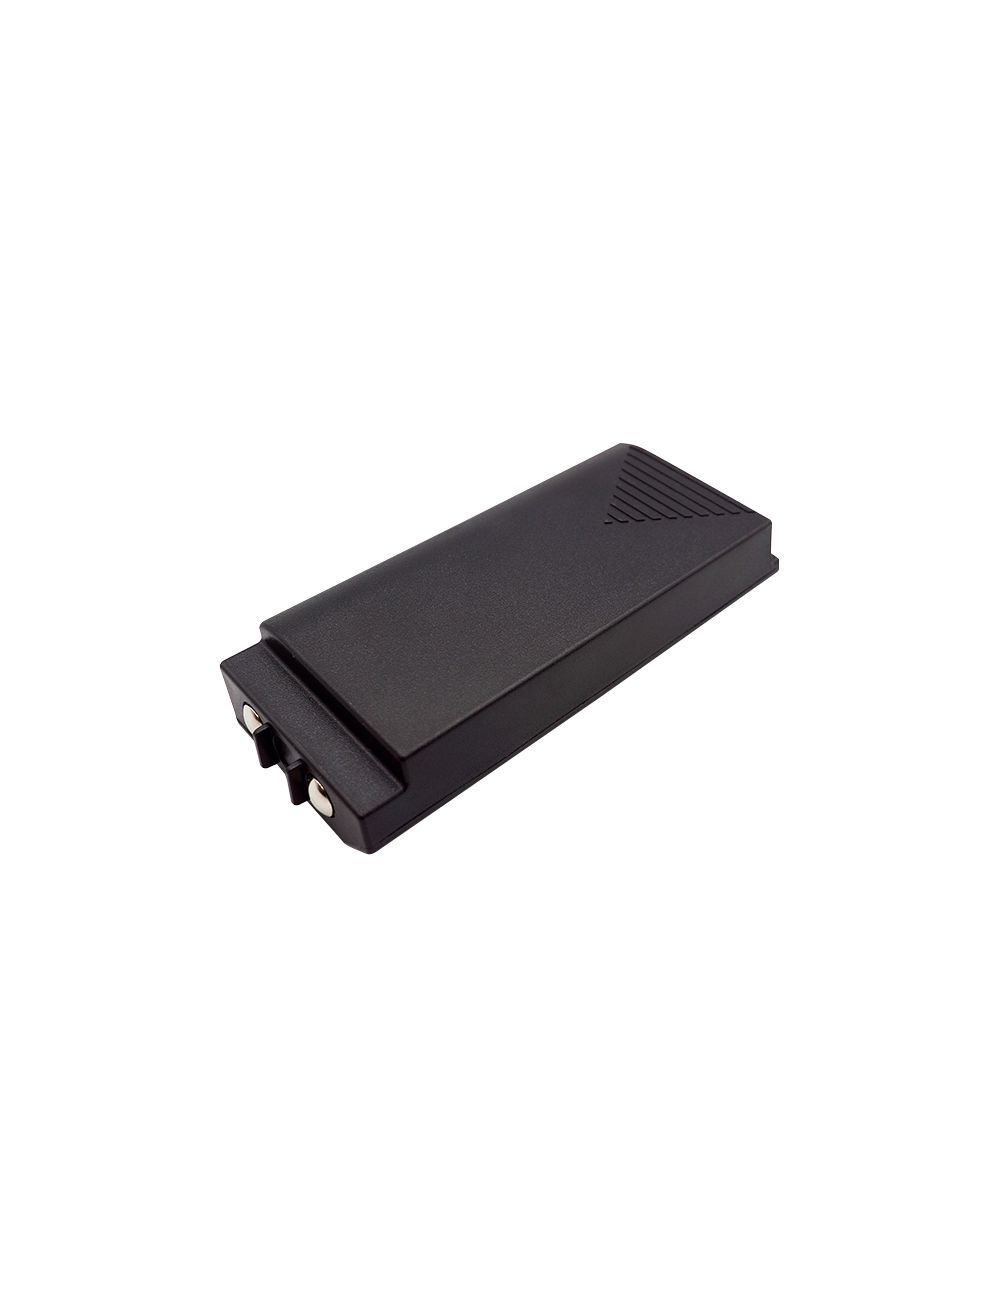 Batería compatible para Hiab XS Drive, XS Drive H3786692, XS Drive H3796692. HIA7220 7,2V 2000mAh - AB-HIA7220 -  - 489412811961